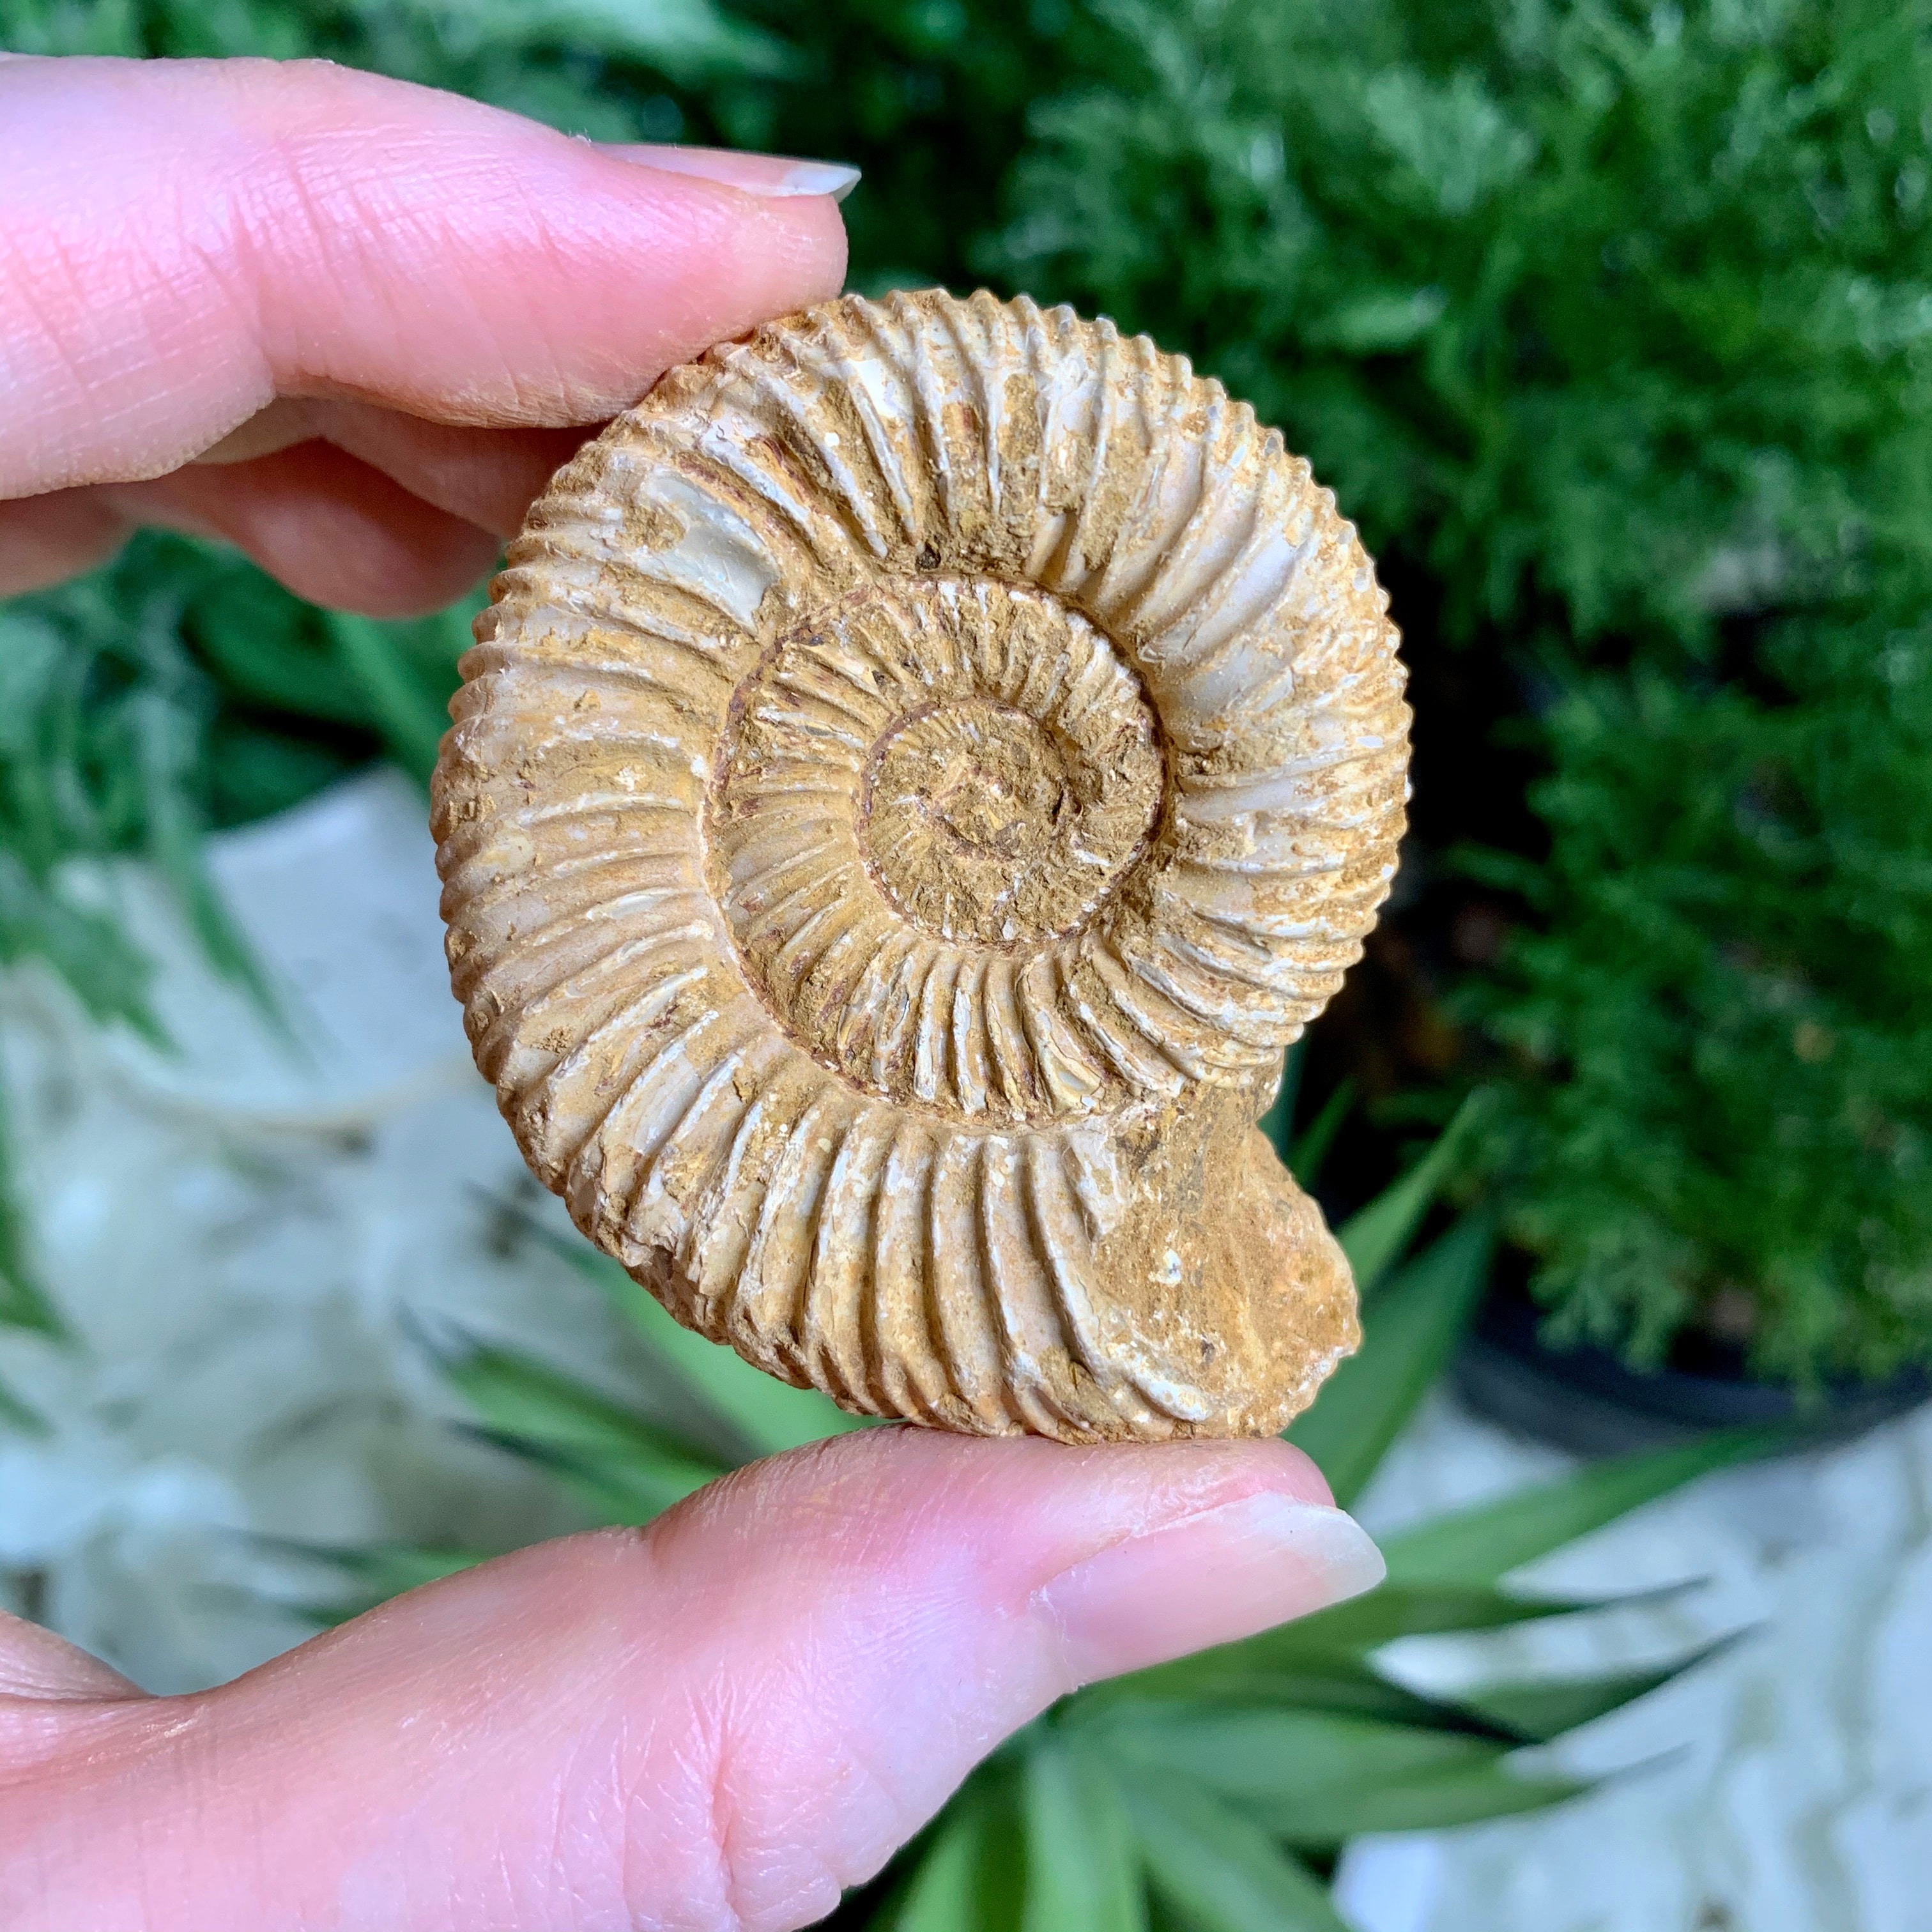 ammonite animal size